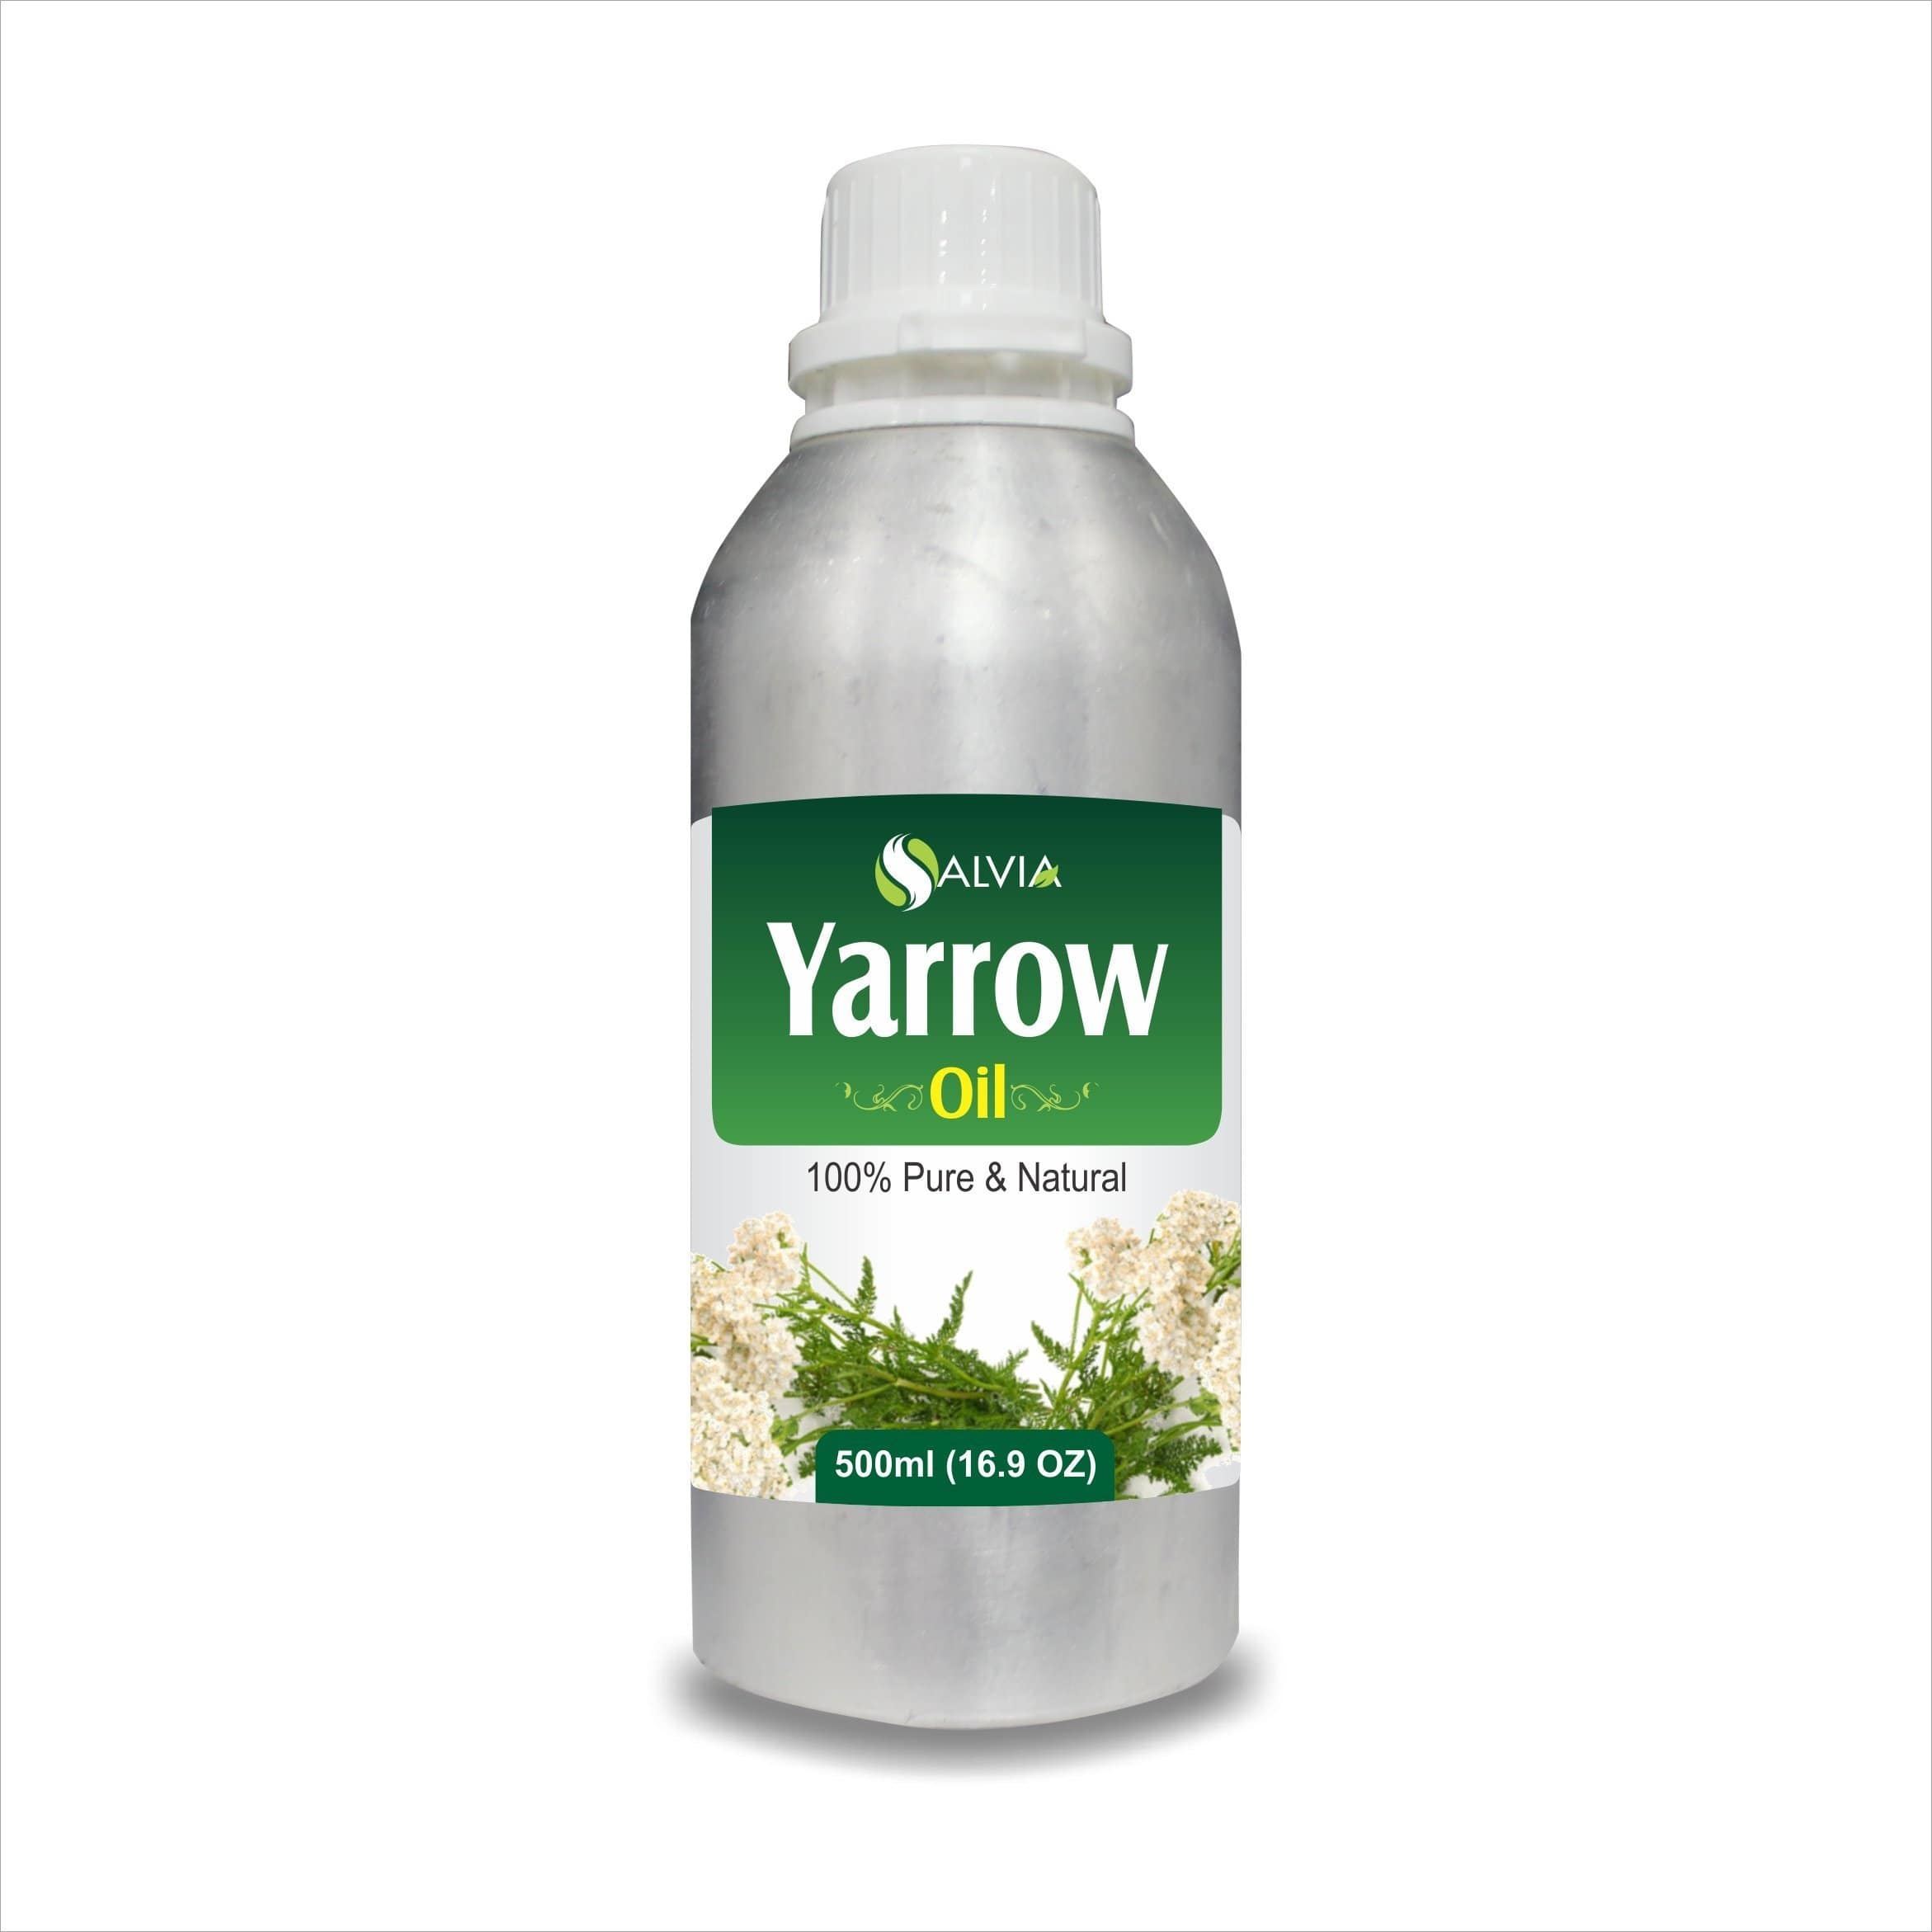 yarrow oil benefits for skin